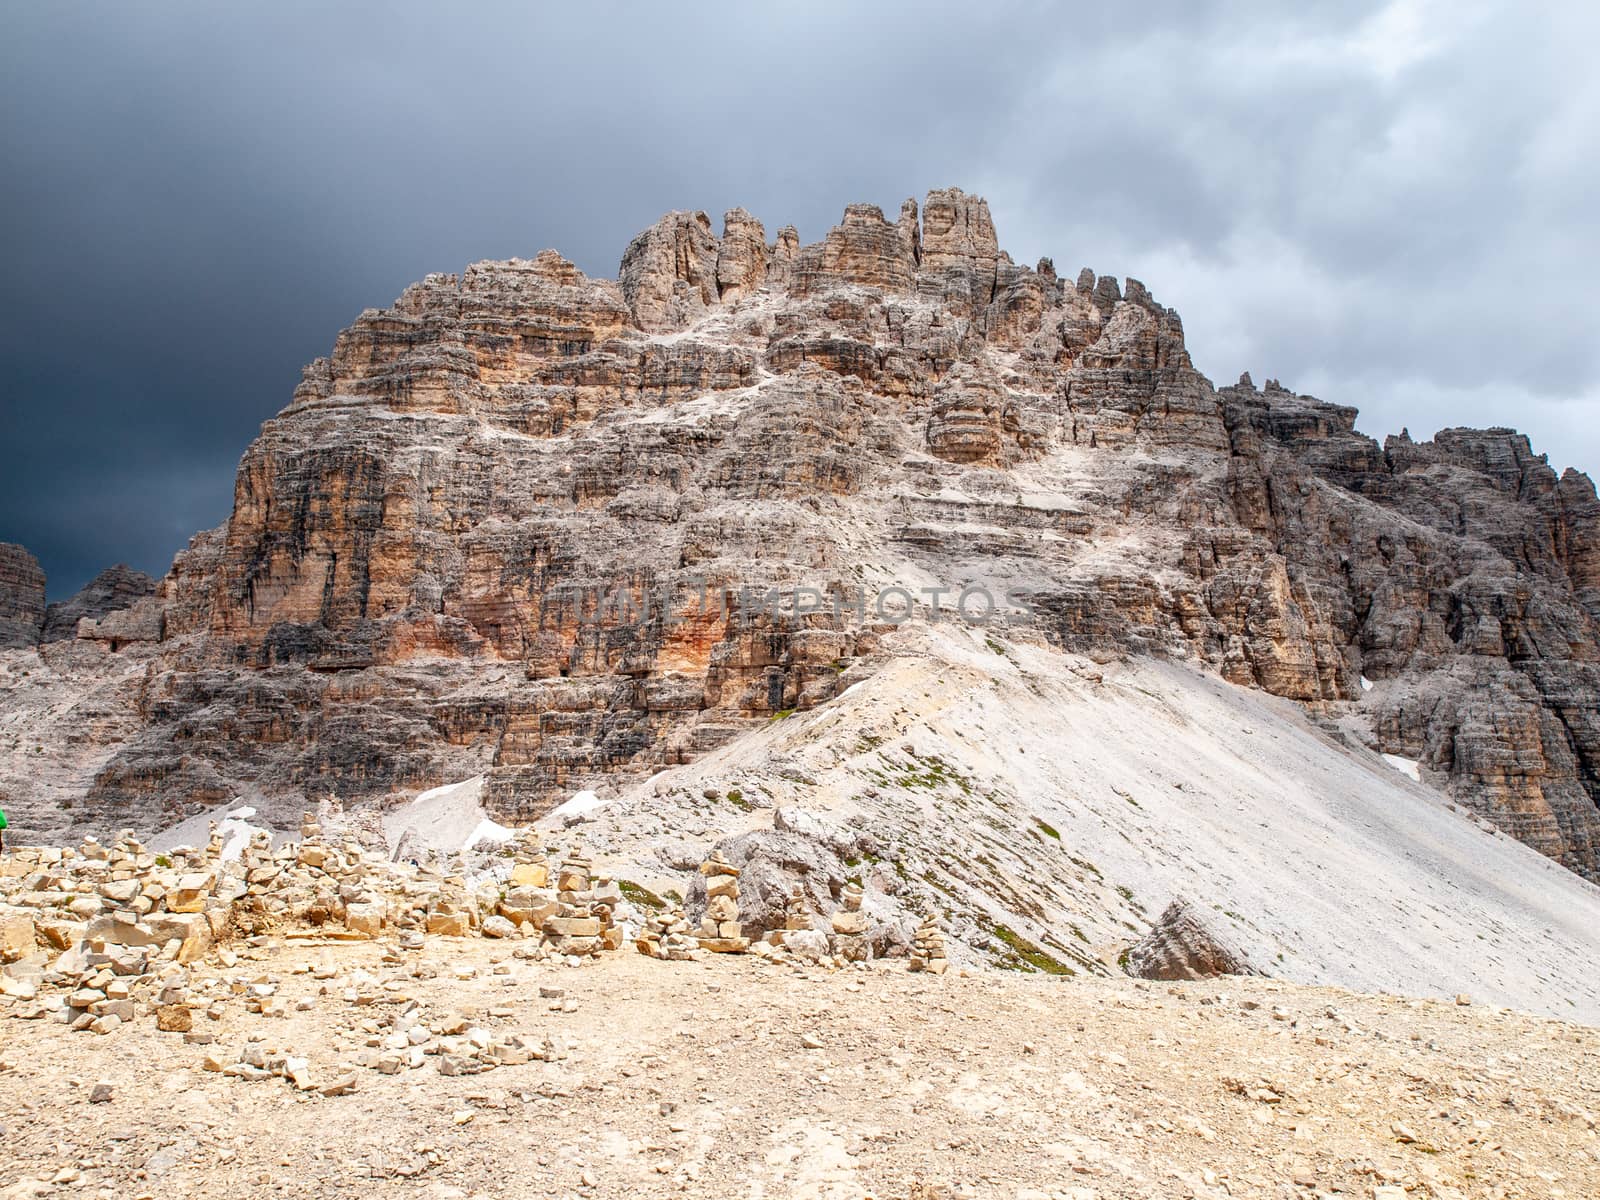 Monte Paterno, aka Paternkogel, near Tre Cime di Lavaredo in Dolomites, Italy by pyty